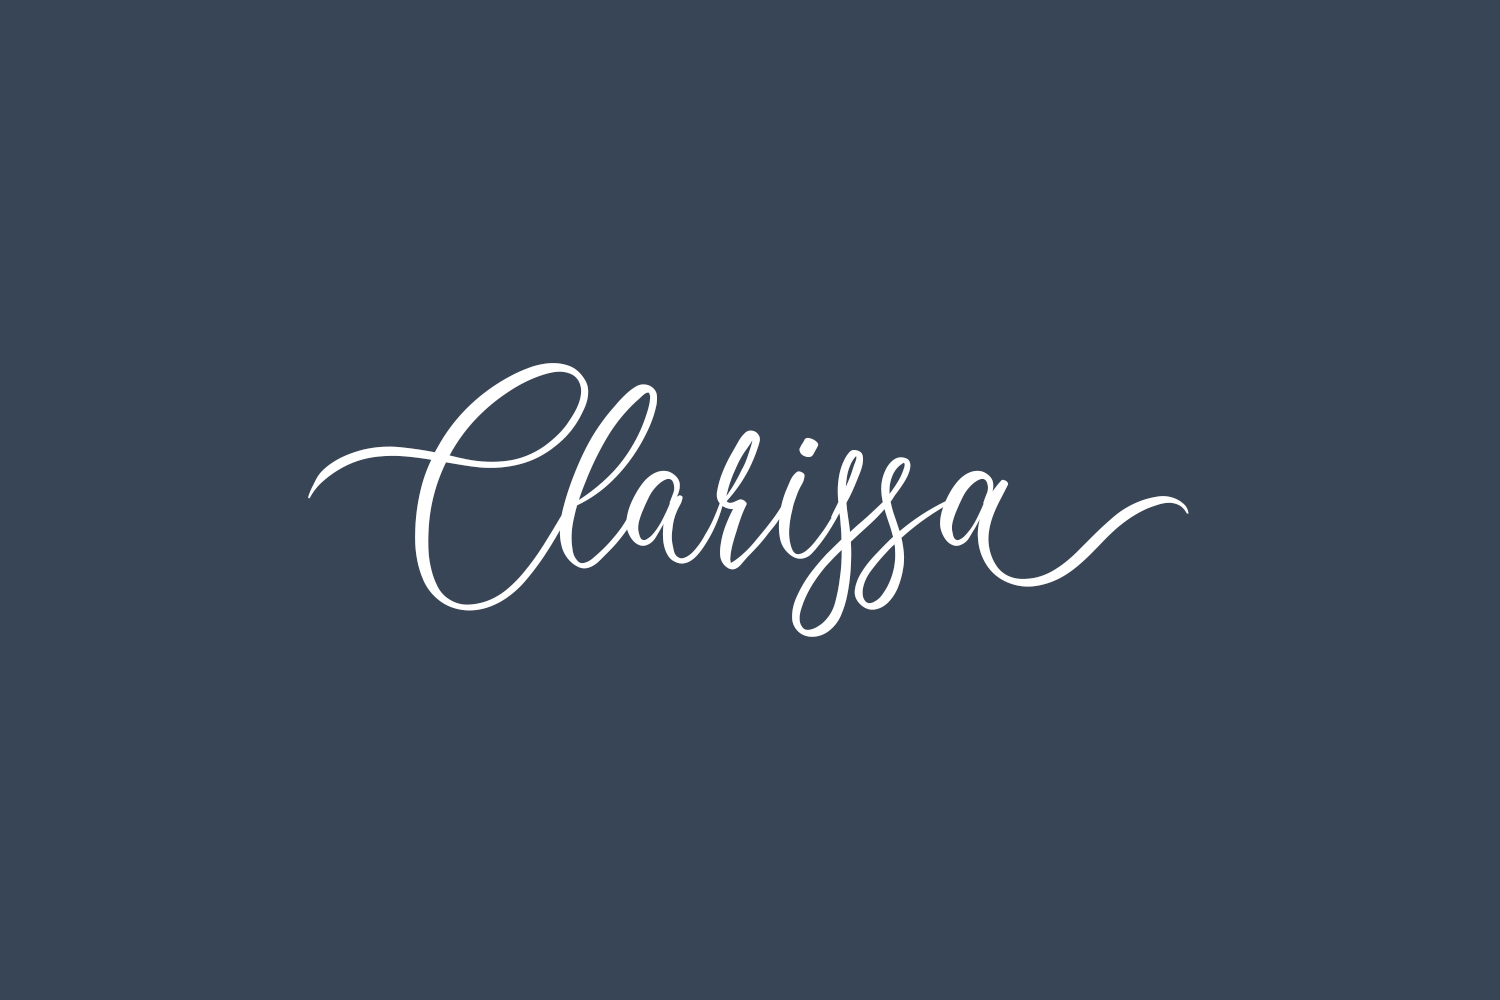 Clarissa Free Font